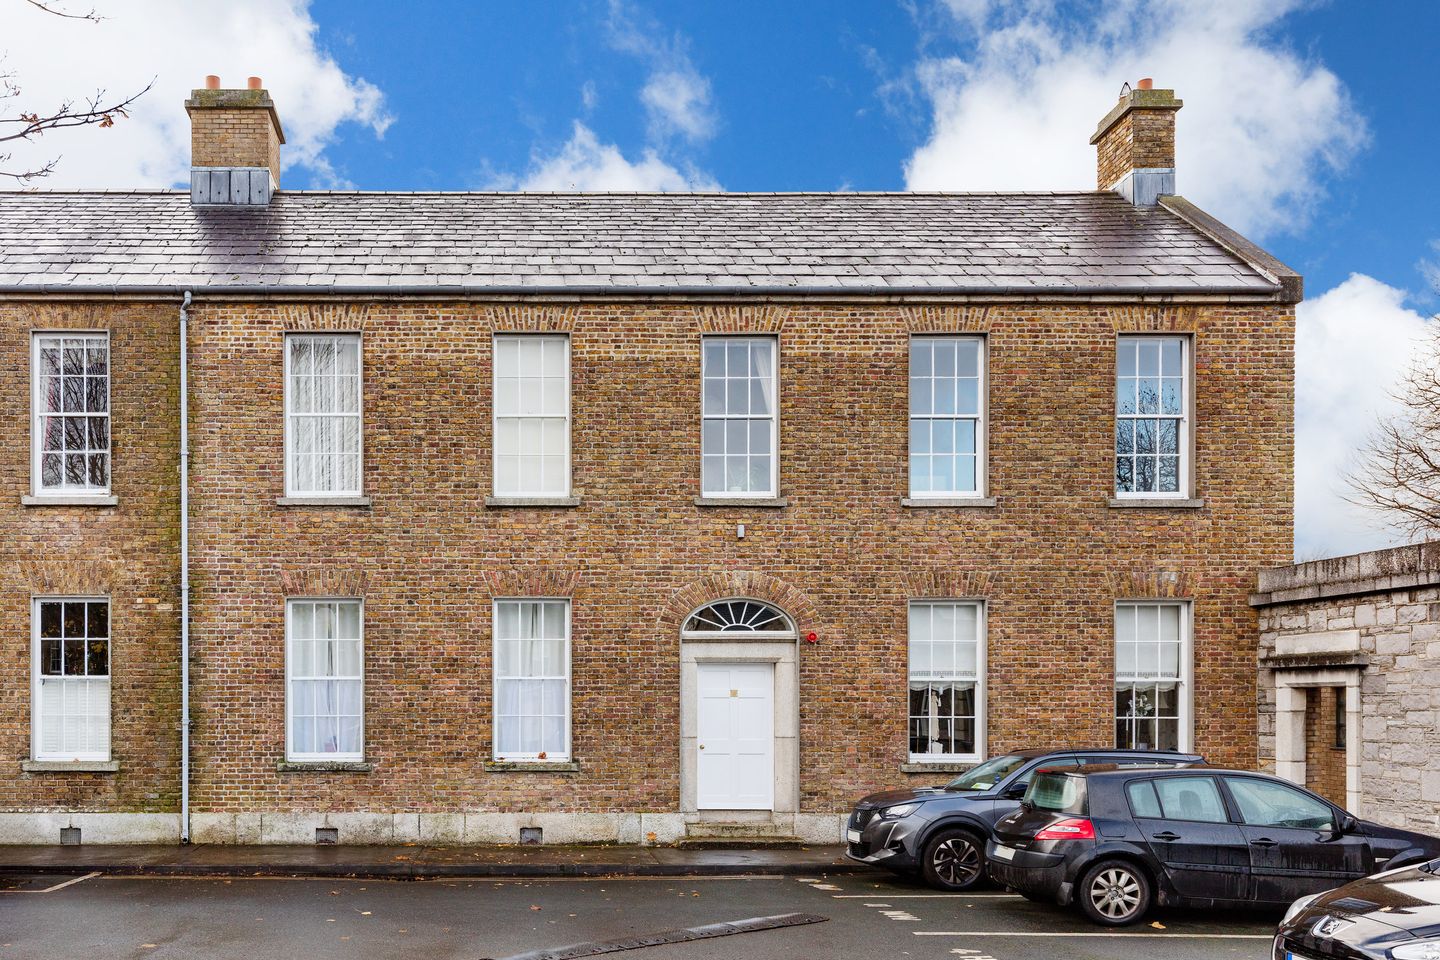 Apartment 5, The Square, Beggar's Bush, Ballsbridge, Dublin 4, D04XY18